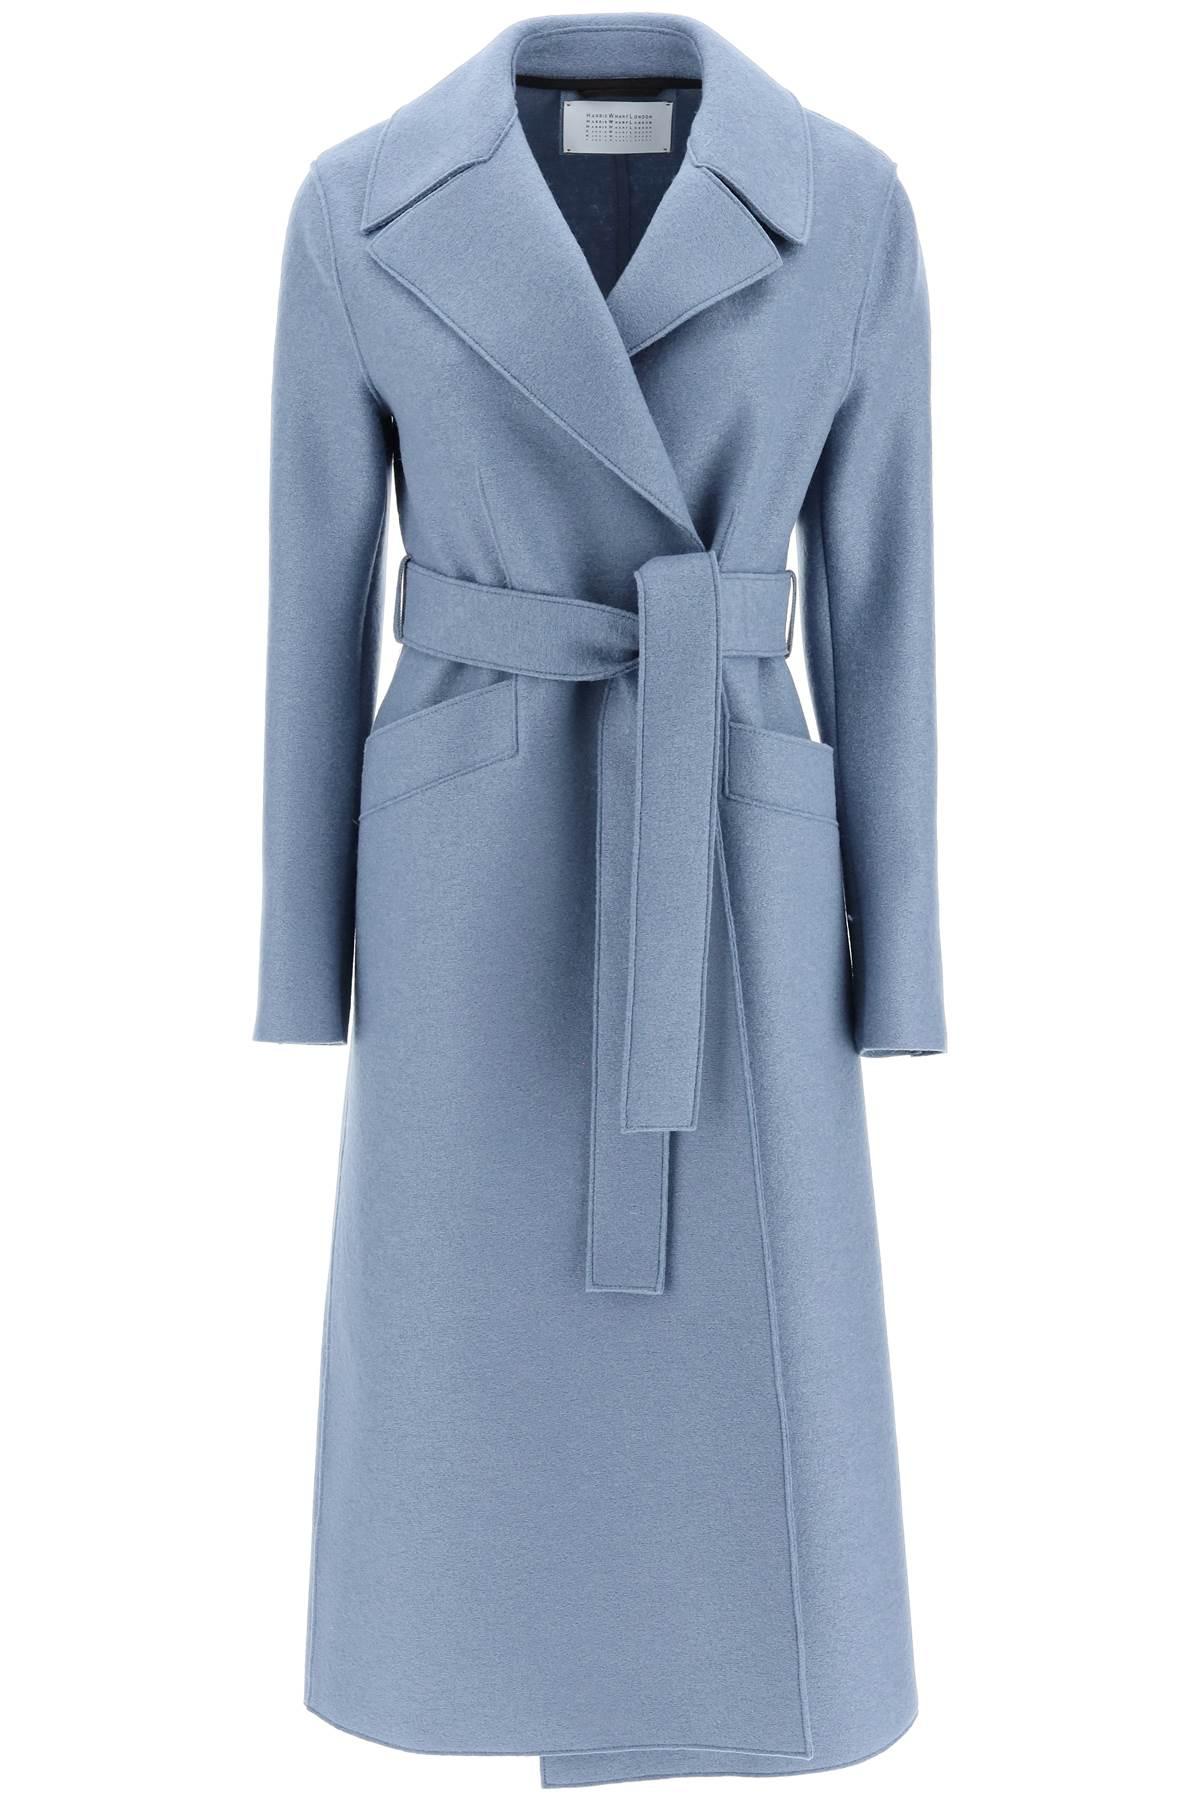 Harris Wharf London Langer Mantel aus gepresster Wolle in Blau | Lyst DE